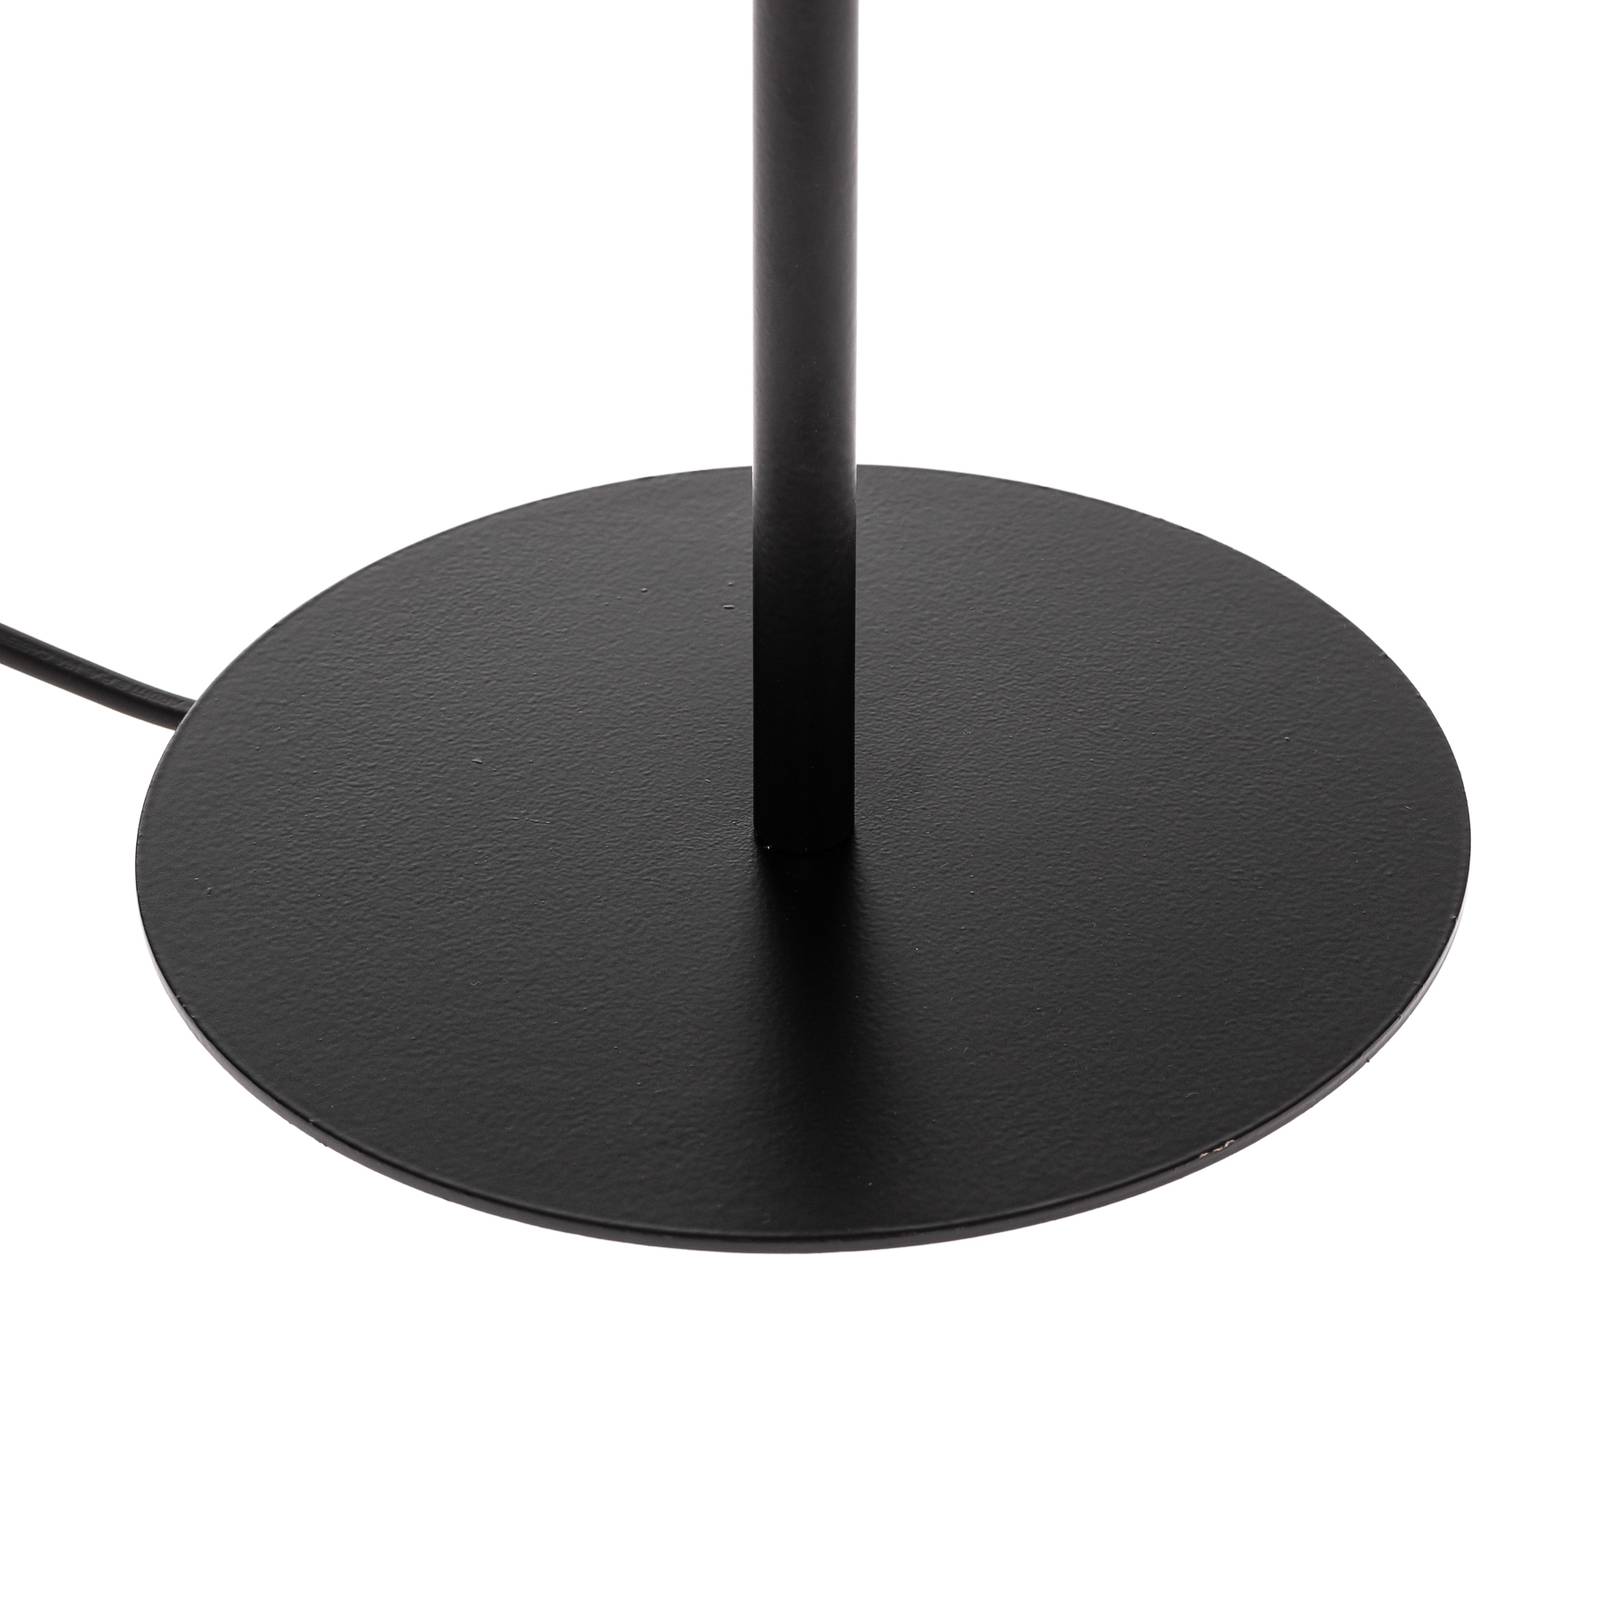 Luminex Arden bordslampa utan skärm svart höjd 24 cm